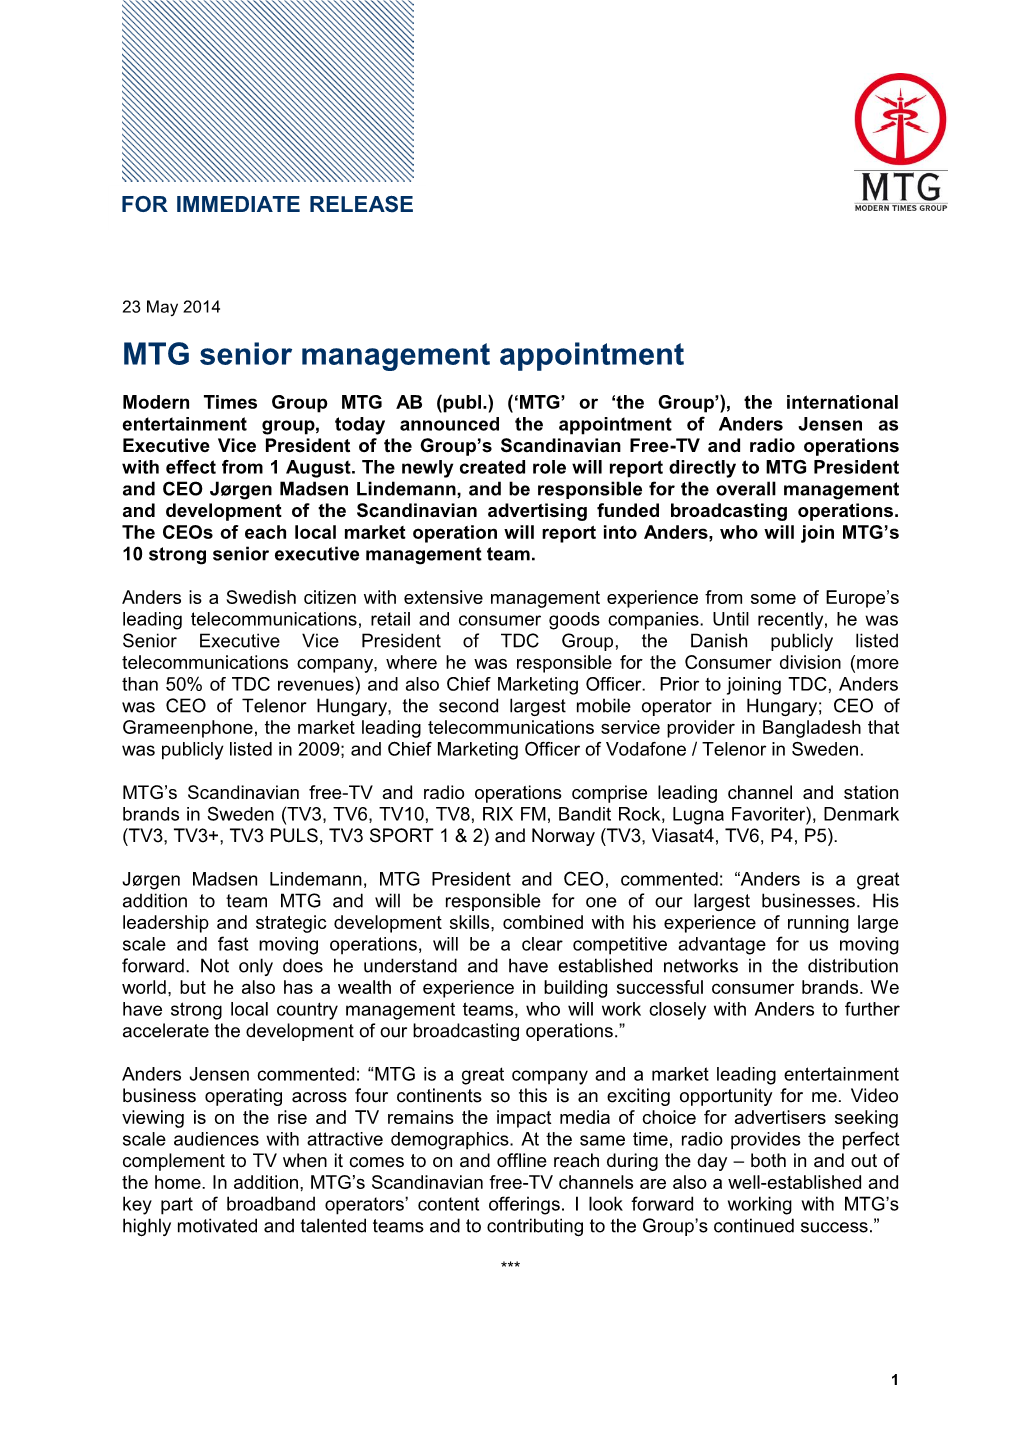 MTG Senior Management Appointment